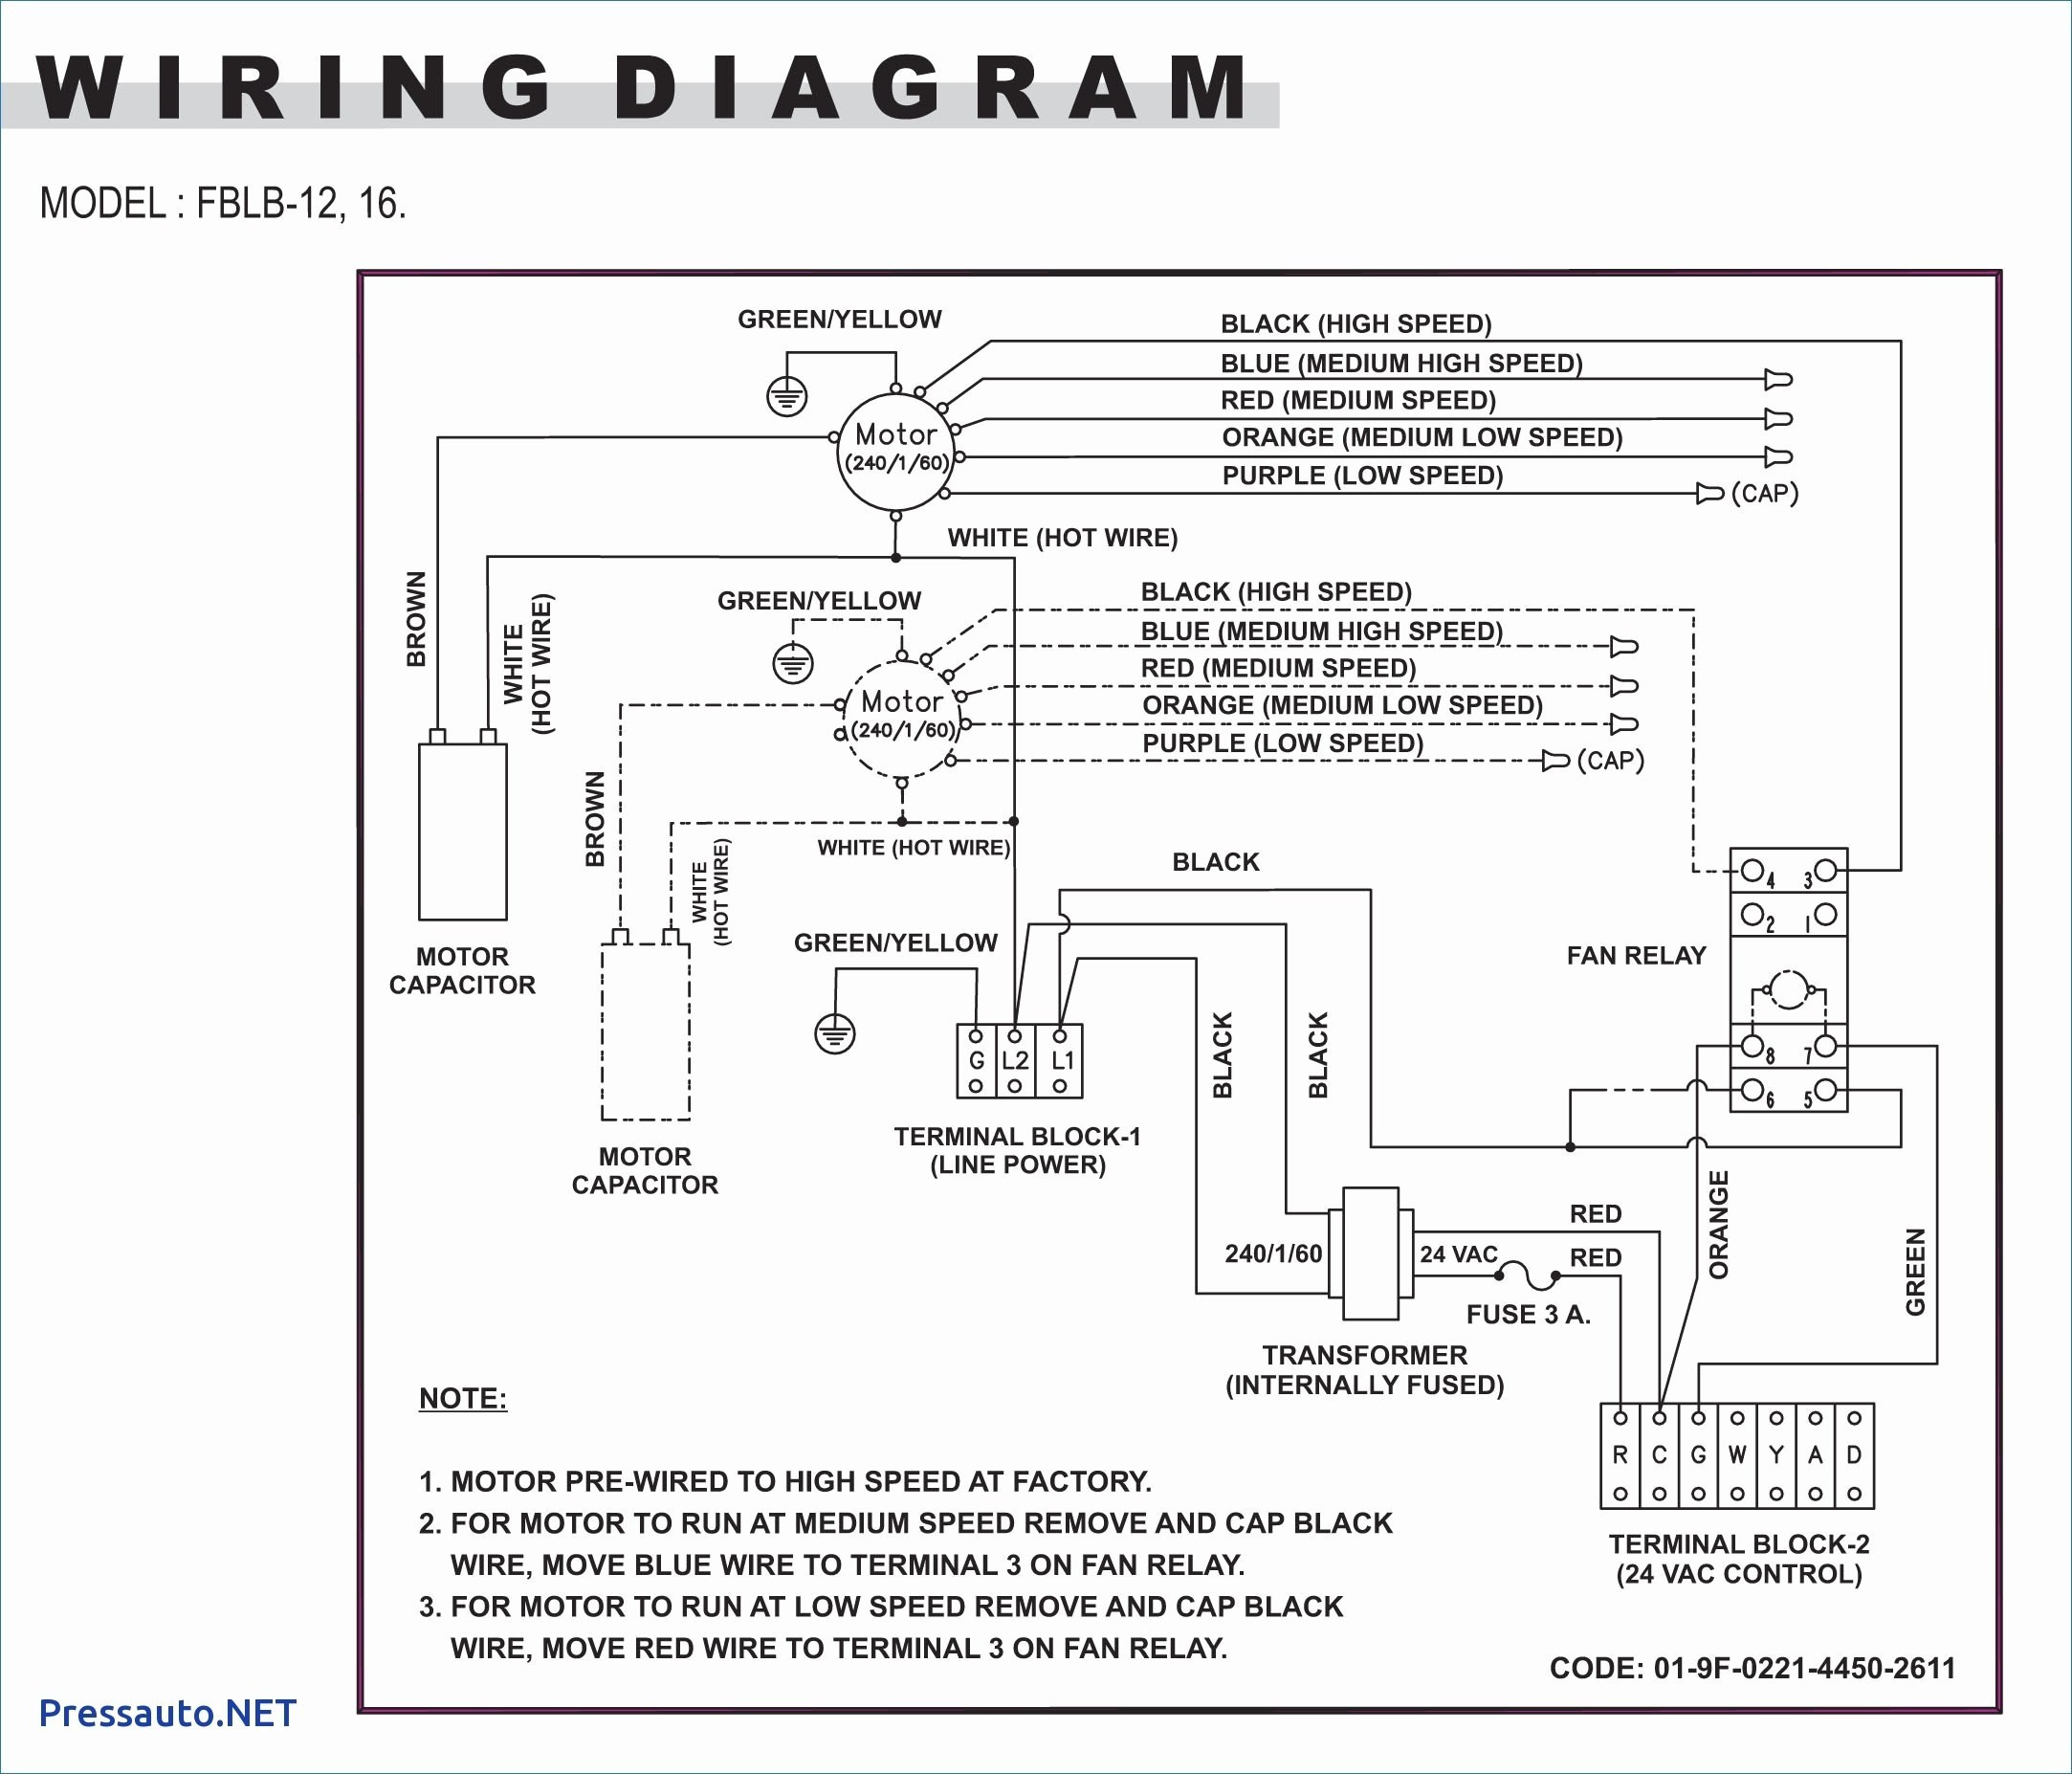 Wiring Diagram for Water Heater Best Wiring Diagram for 220v Baseboard Heater Fresh Baseboard Heaters